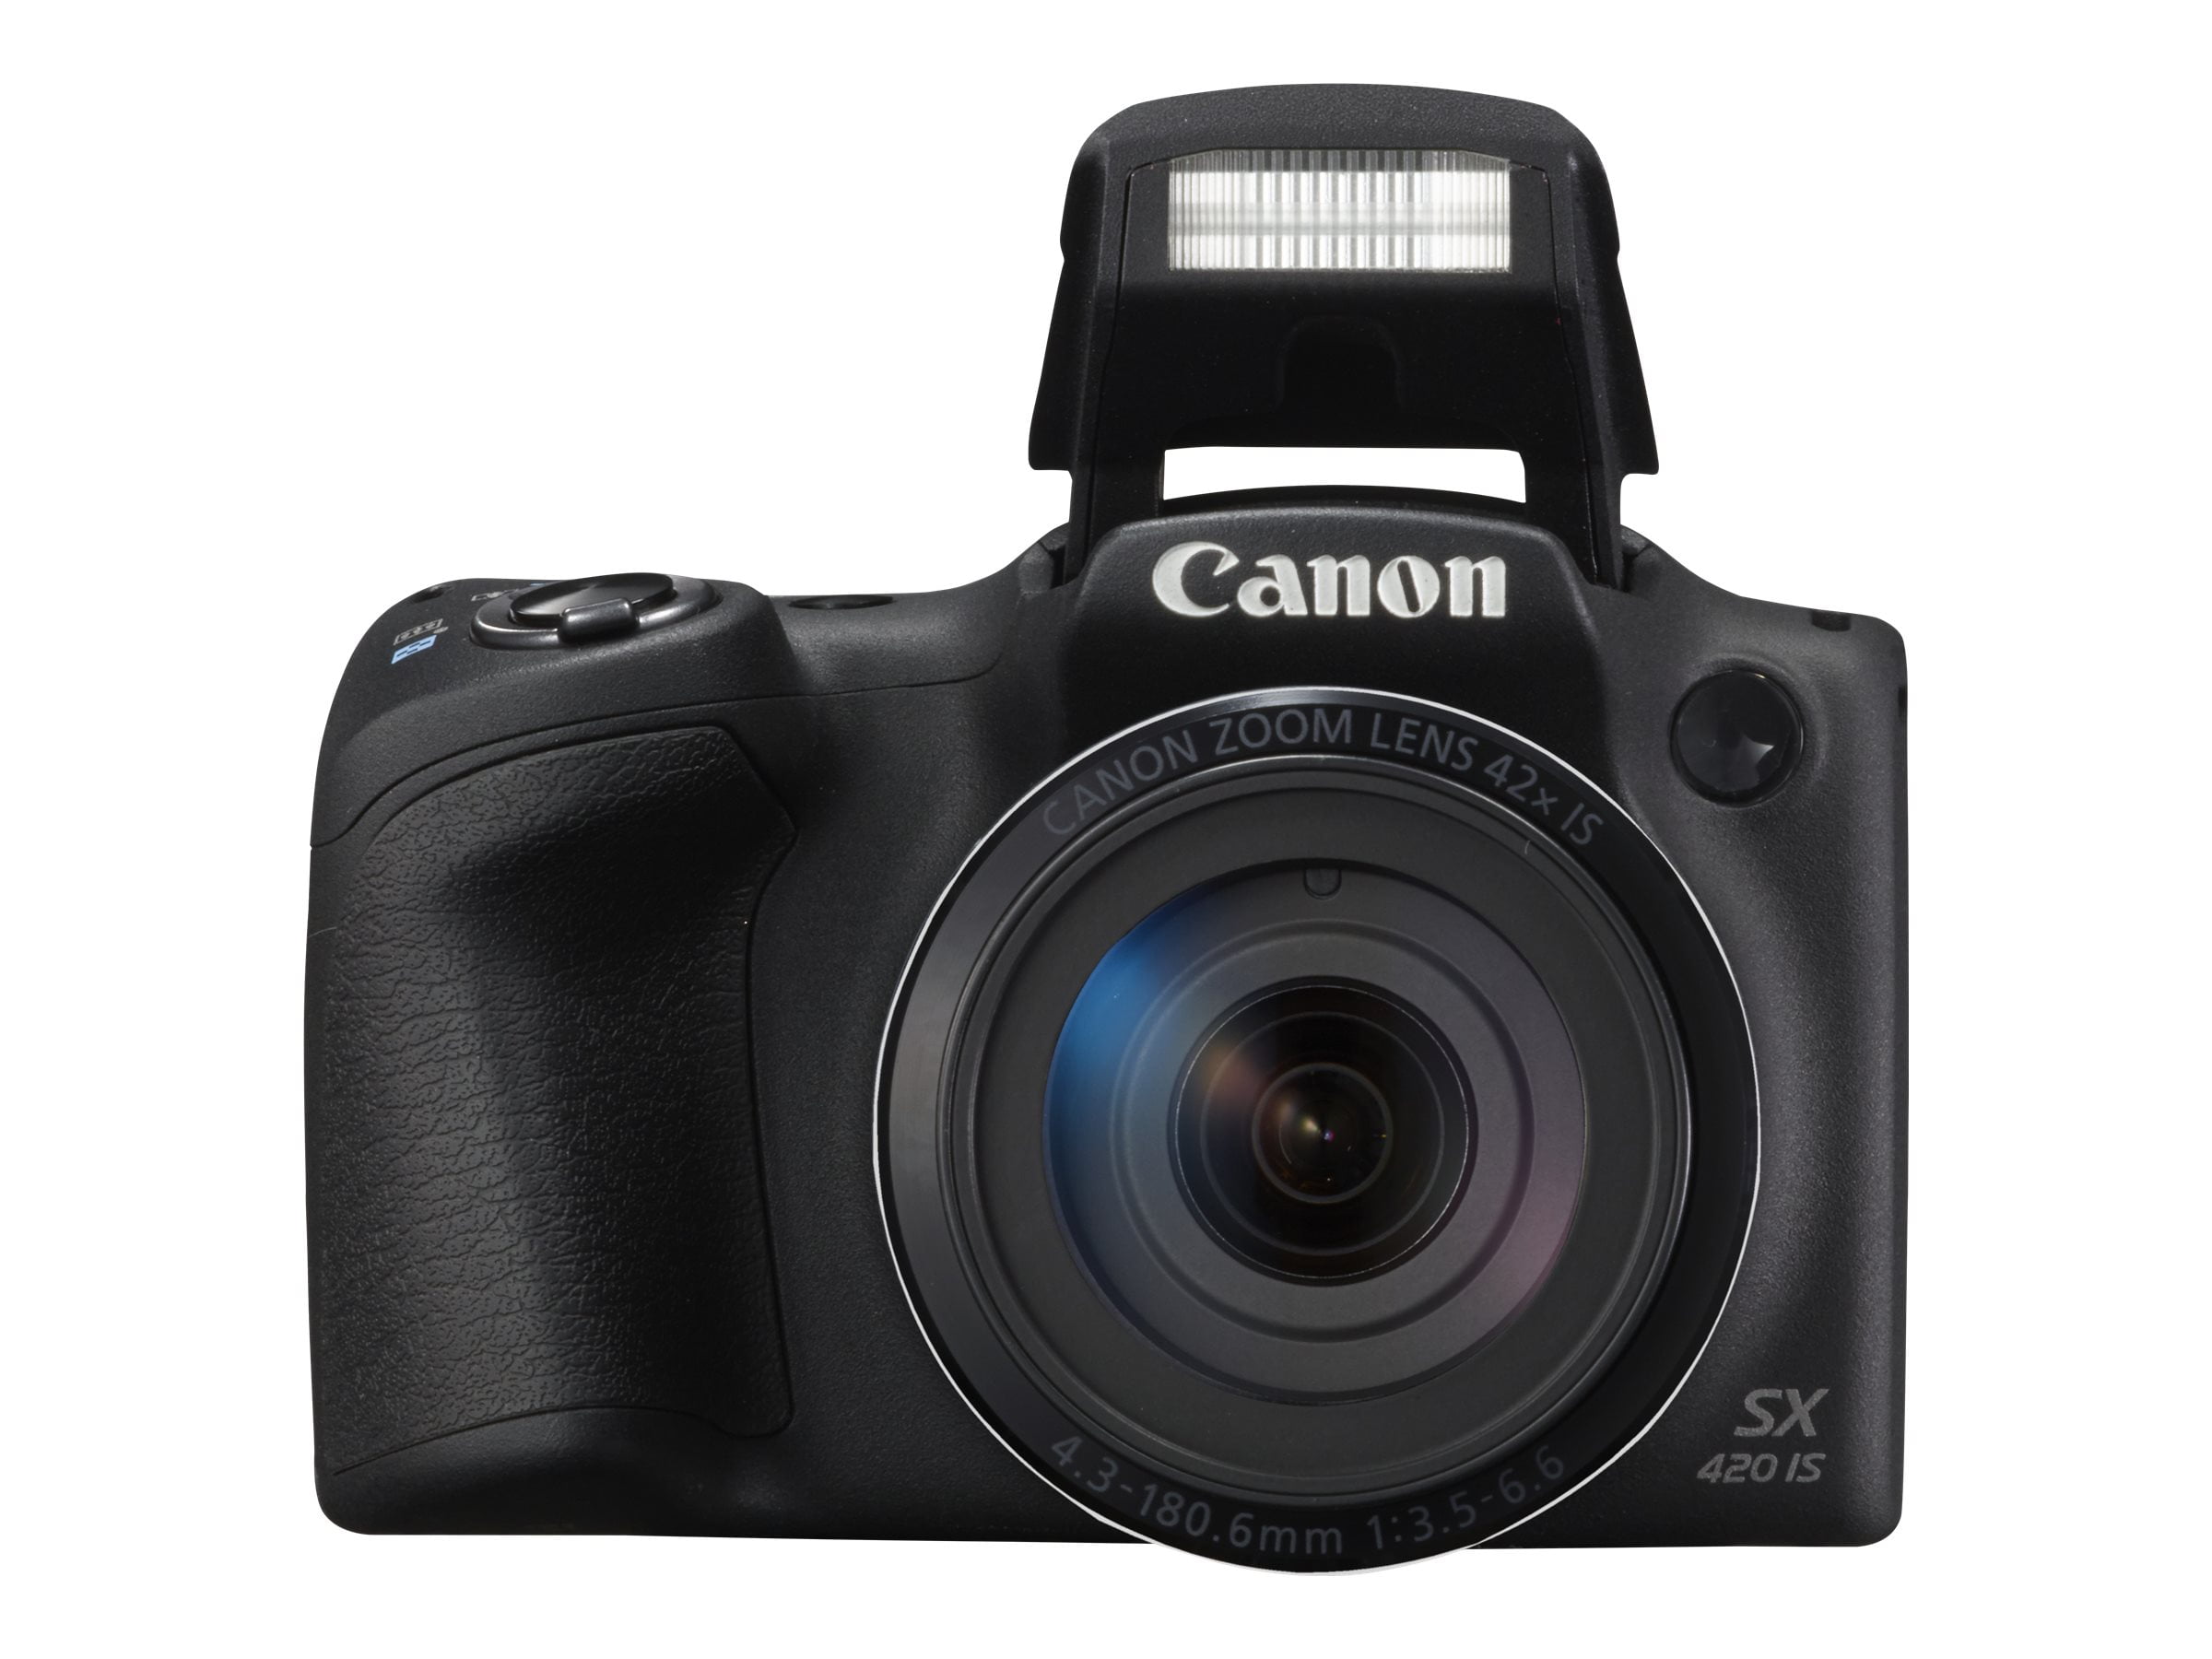 Canon PowerShot SX420 IS - Digital camera - compact - 20.0 MP - 720p / 25  fps - 42x optical zoom - Wi-Fi, NFC - black